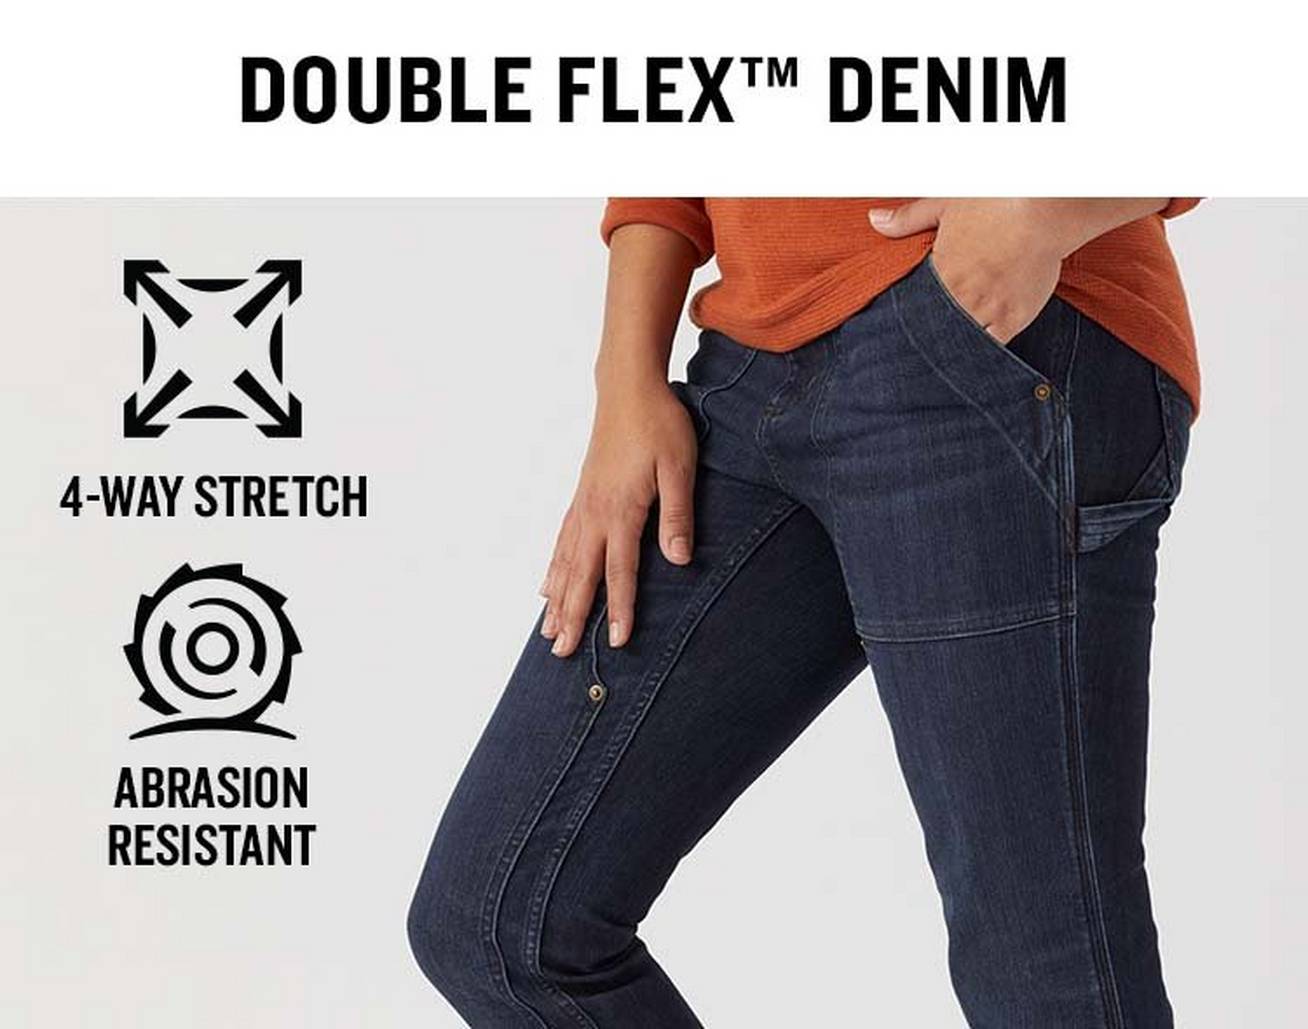 Double Flex (TM) Denim. 4-Way stretch, abrasion resistant.